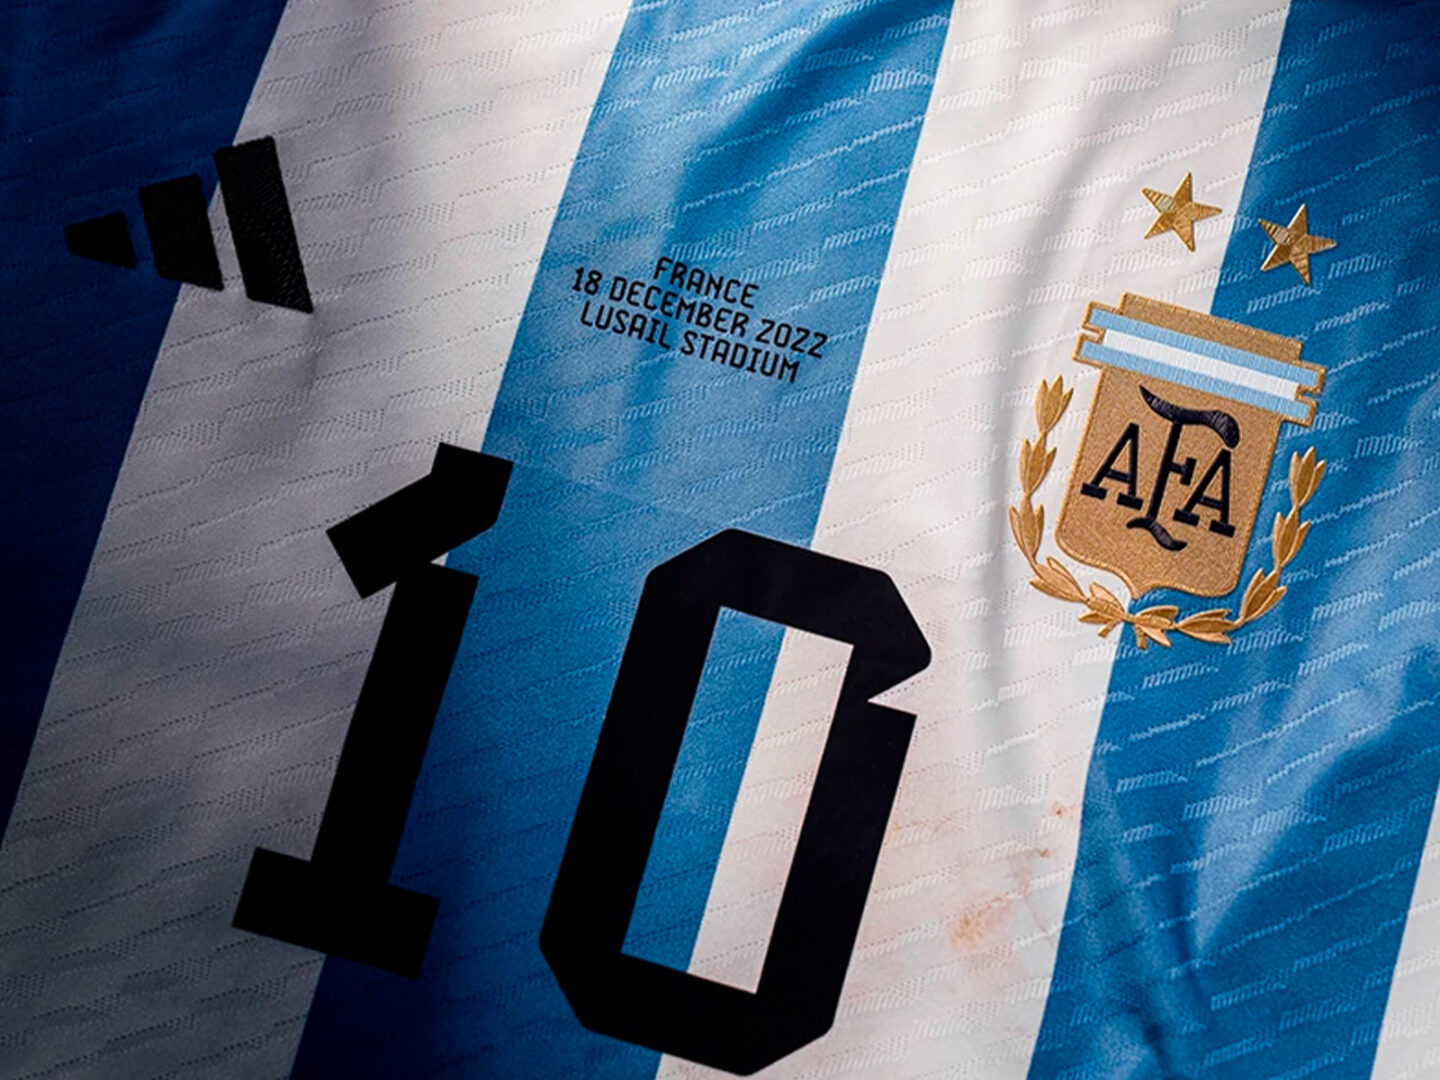 Football Argentina wallpaper - Opera add-ons